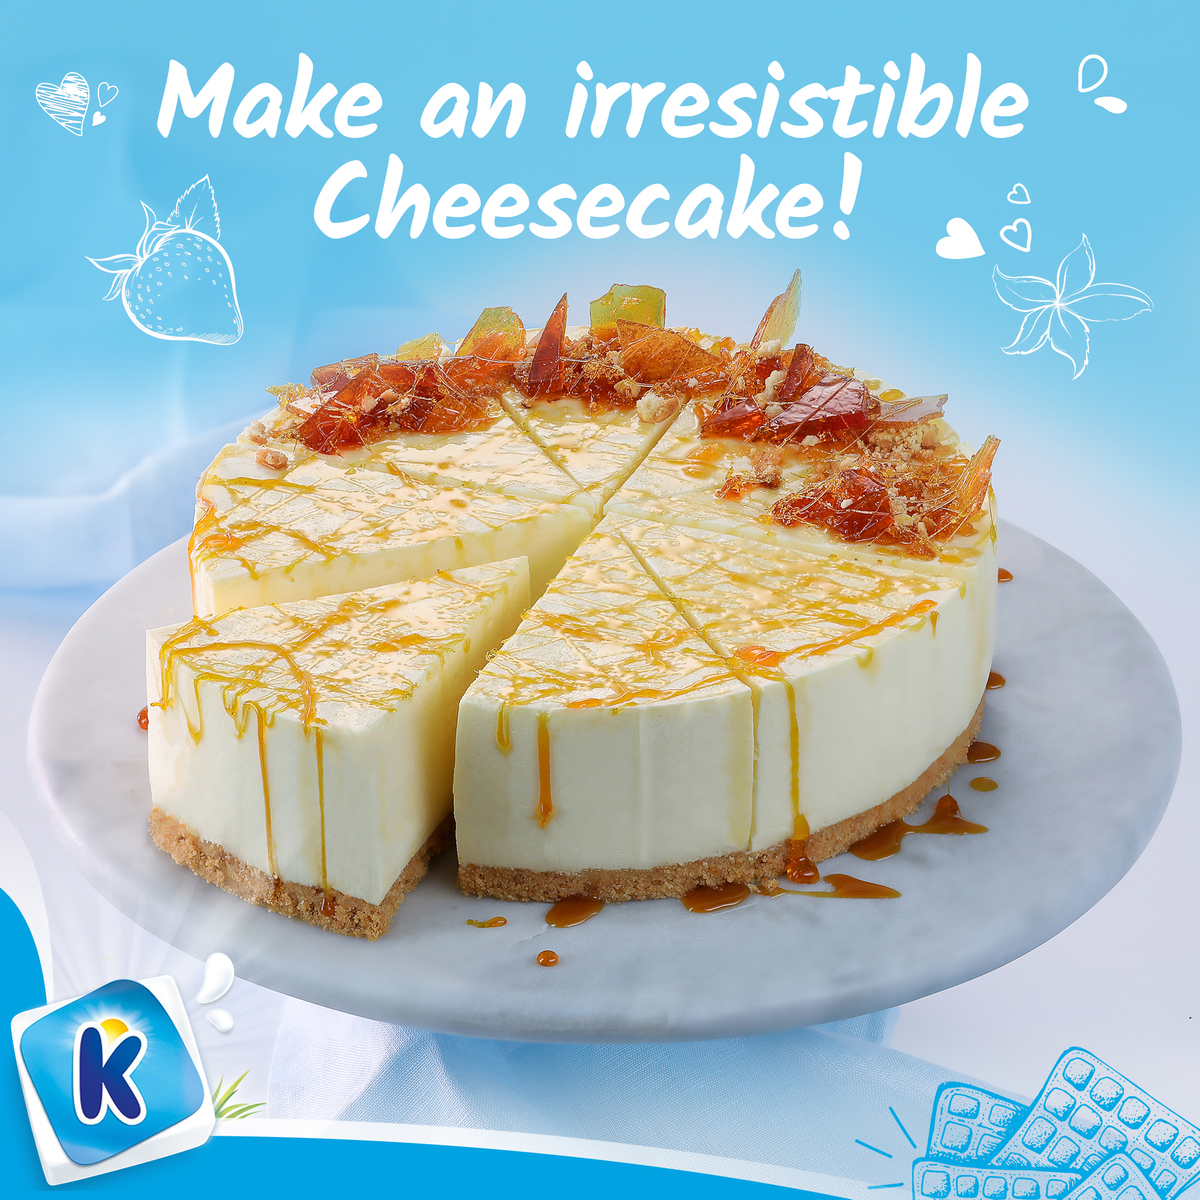 Kiri Spreadable Cream Cheese Squares 6 Portions 108 g